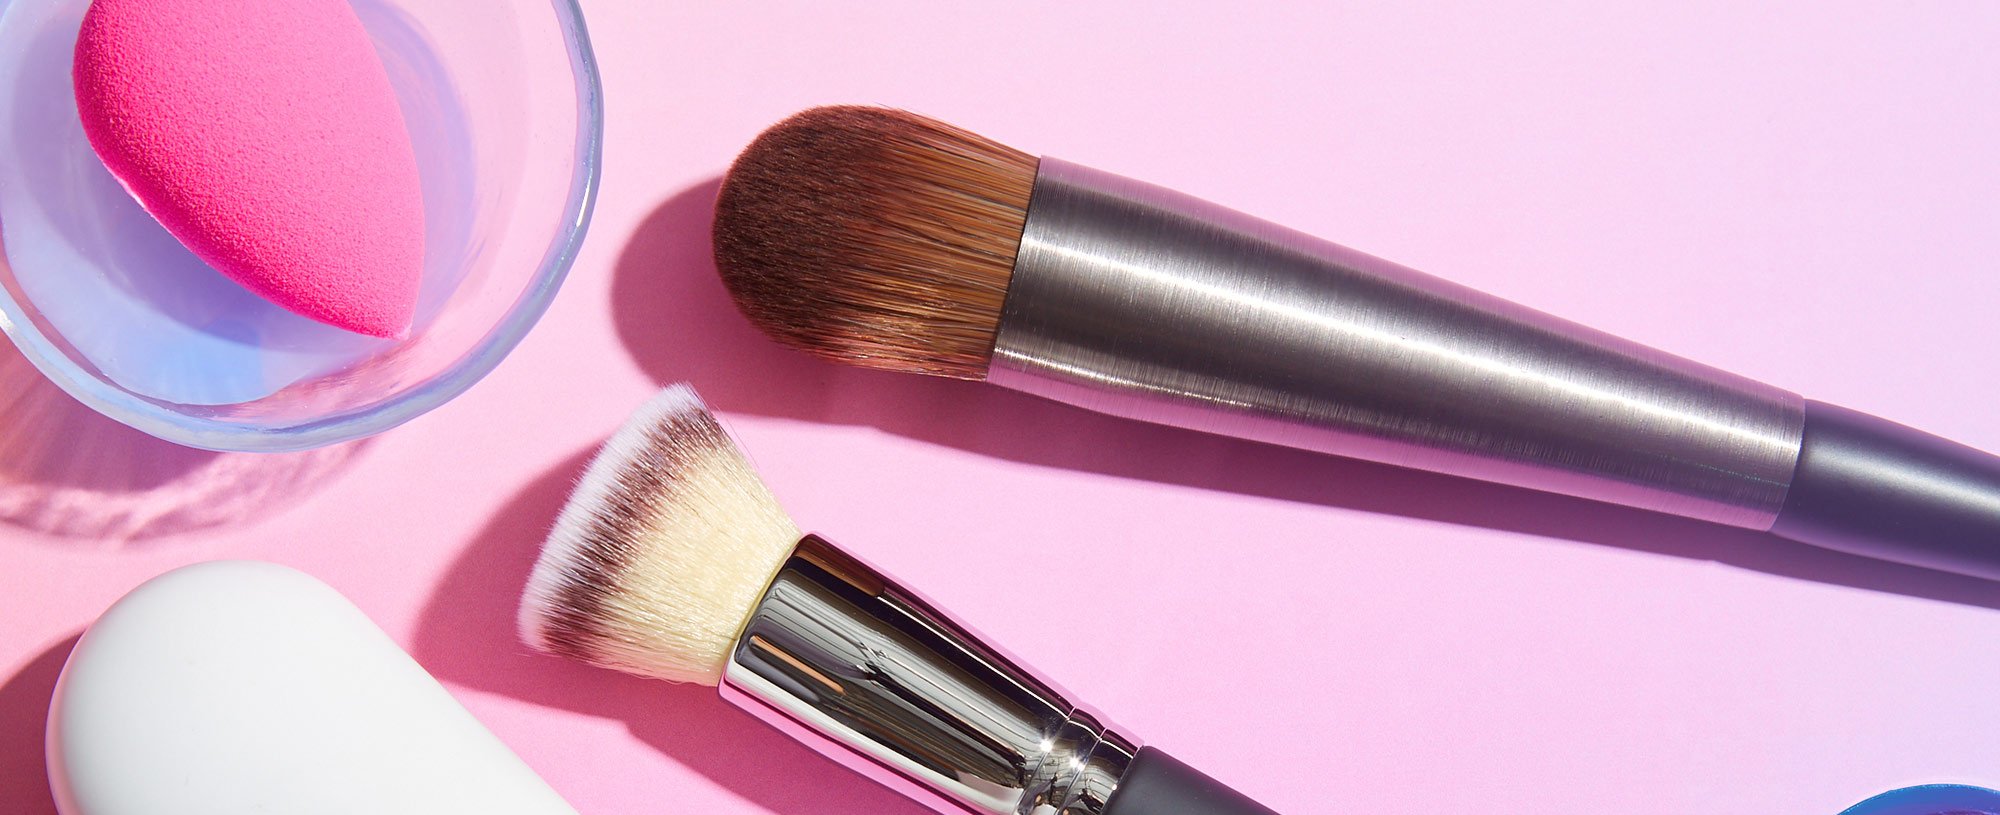 https://www.lorealparisusa.com/-/media/project/loreal/brand-sites/oap/americas/us/beauty-magazine/2021/double-authoring-folder/how-to-clean-makeup-brushes-and-sponges/cleaning-makeup-brushes-and-blenders-cms-bmag.jpg?rev=64d2080ce03c4dddadb0458252d45607&cx=0.52&cy=0.45&cw=2000&ch=815&hash=957E7F194AF7448E027834C1DFDECE2A8398C98A